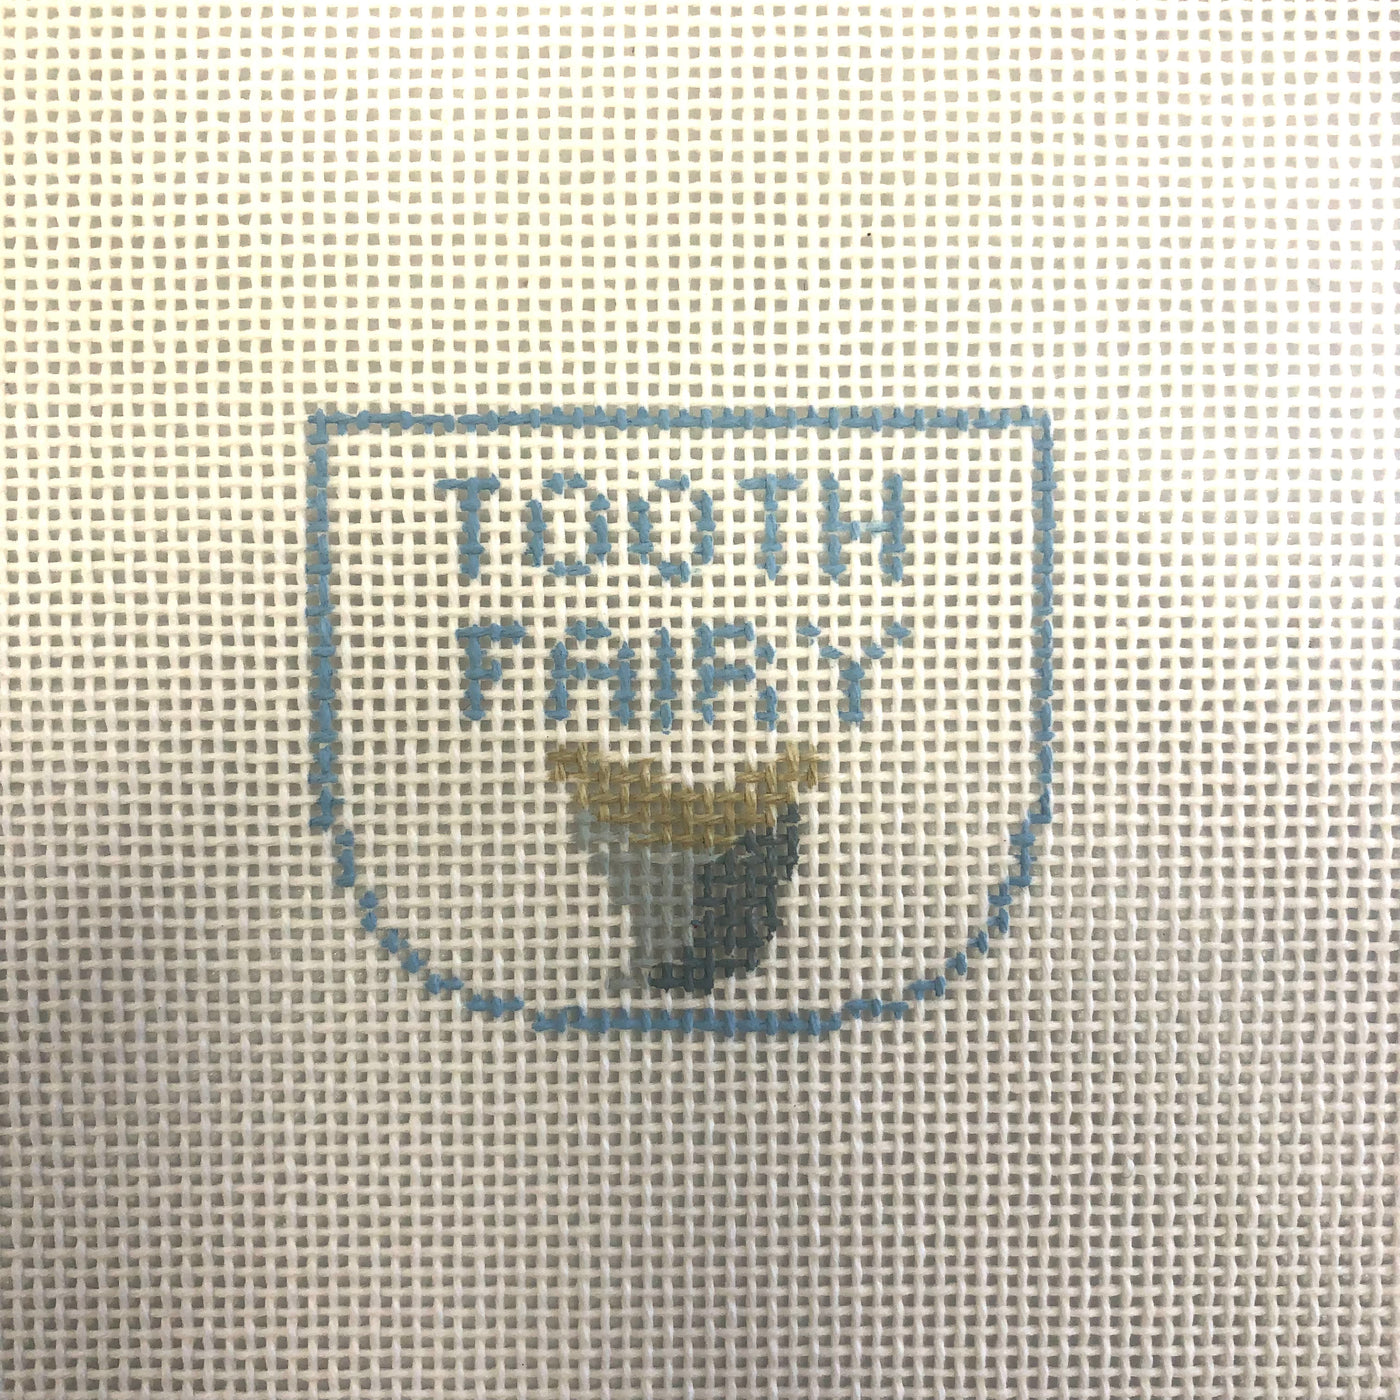 Shark Tooth Fairy Pillow